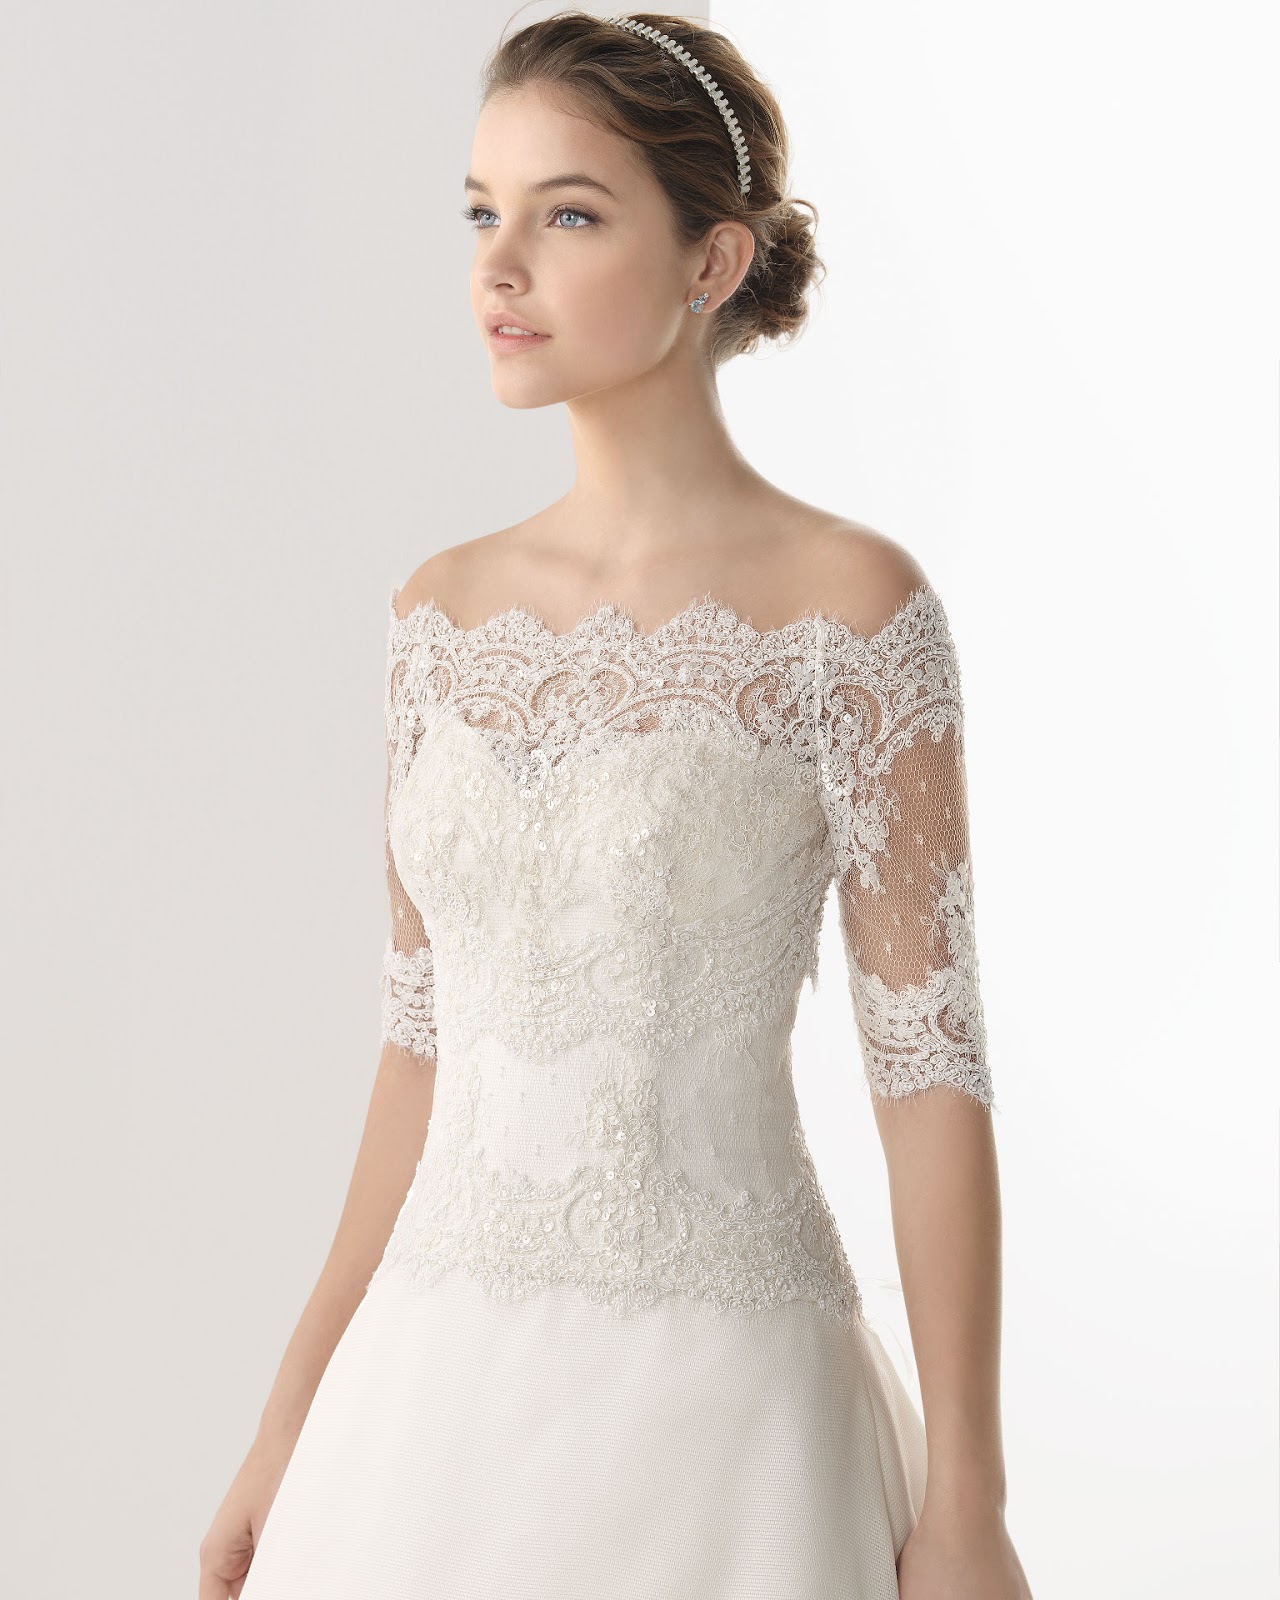 lace wedding dresses pinterest DressyBridal